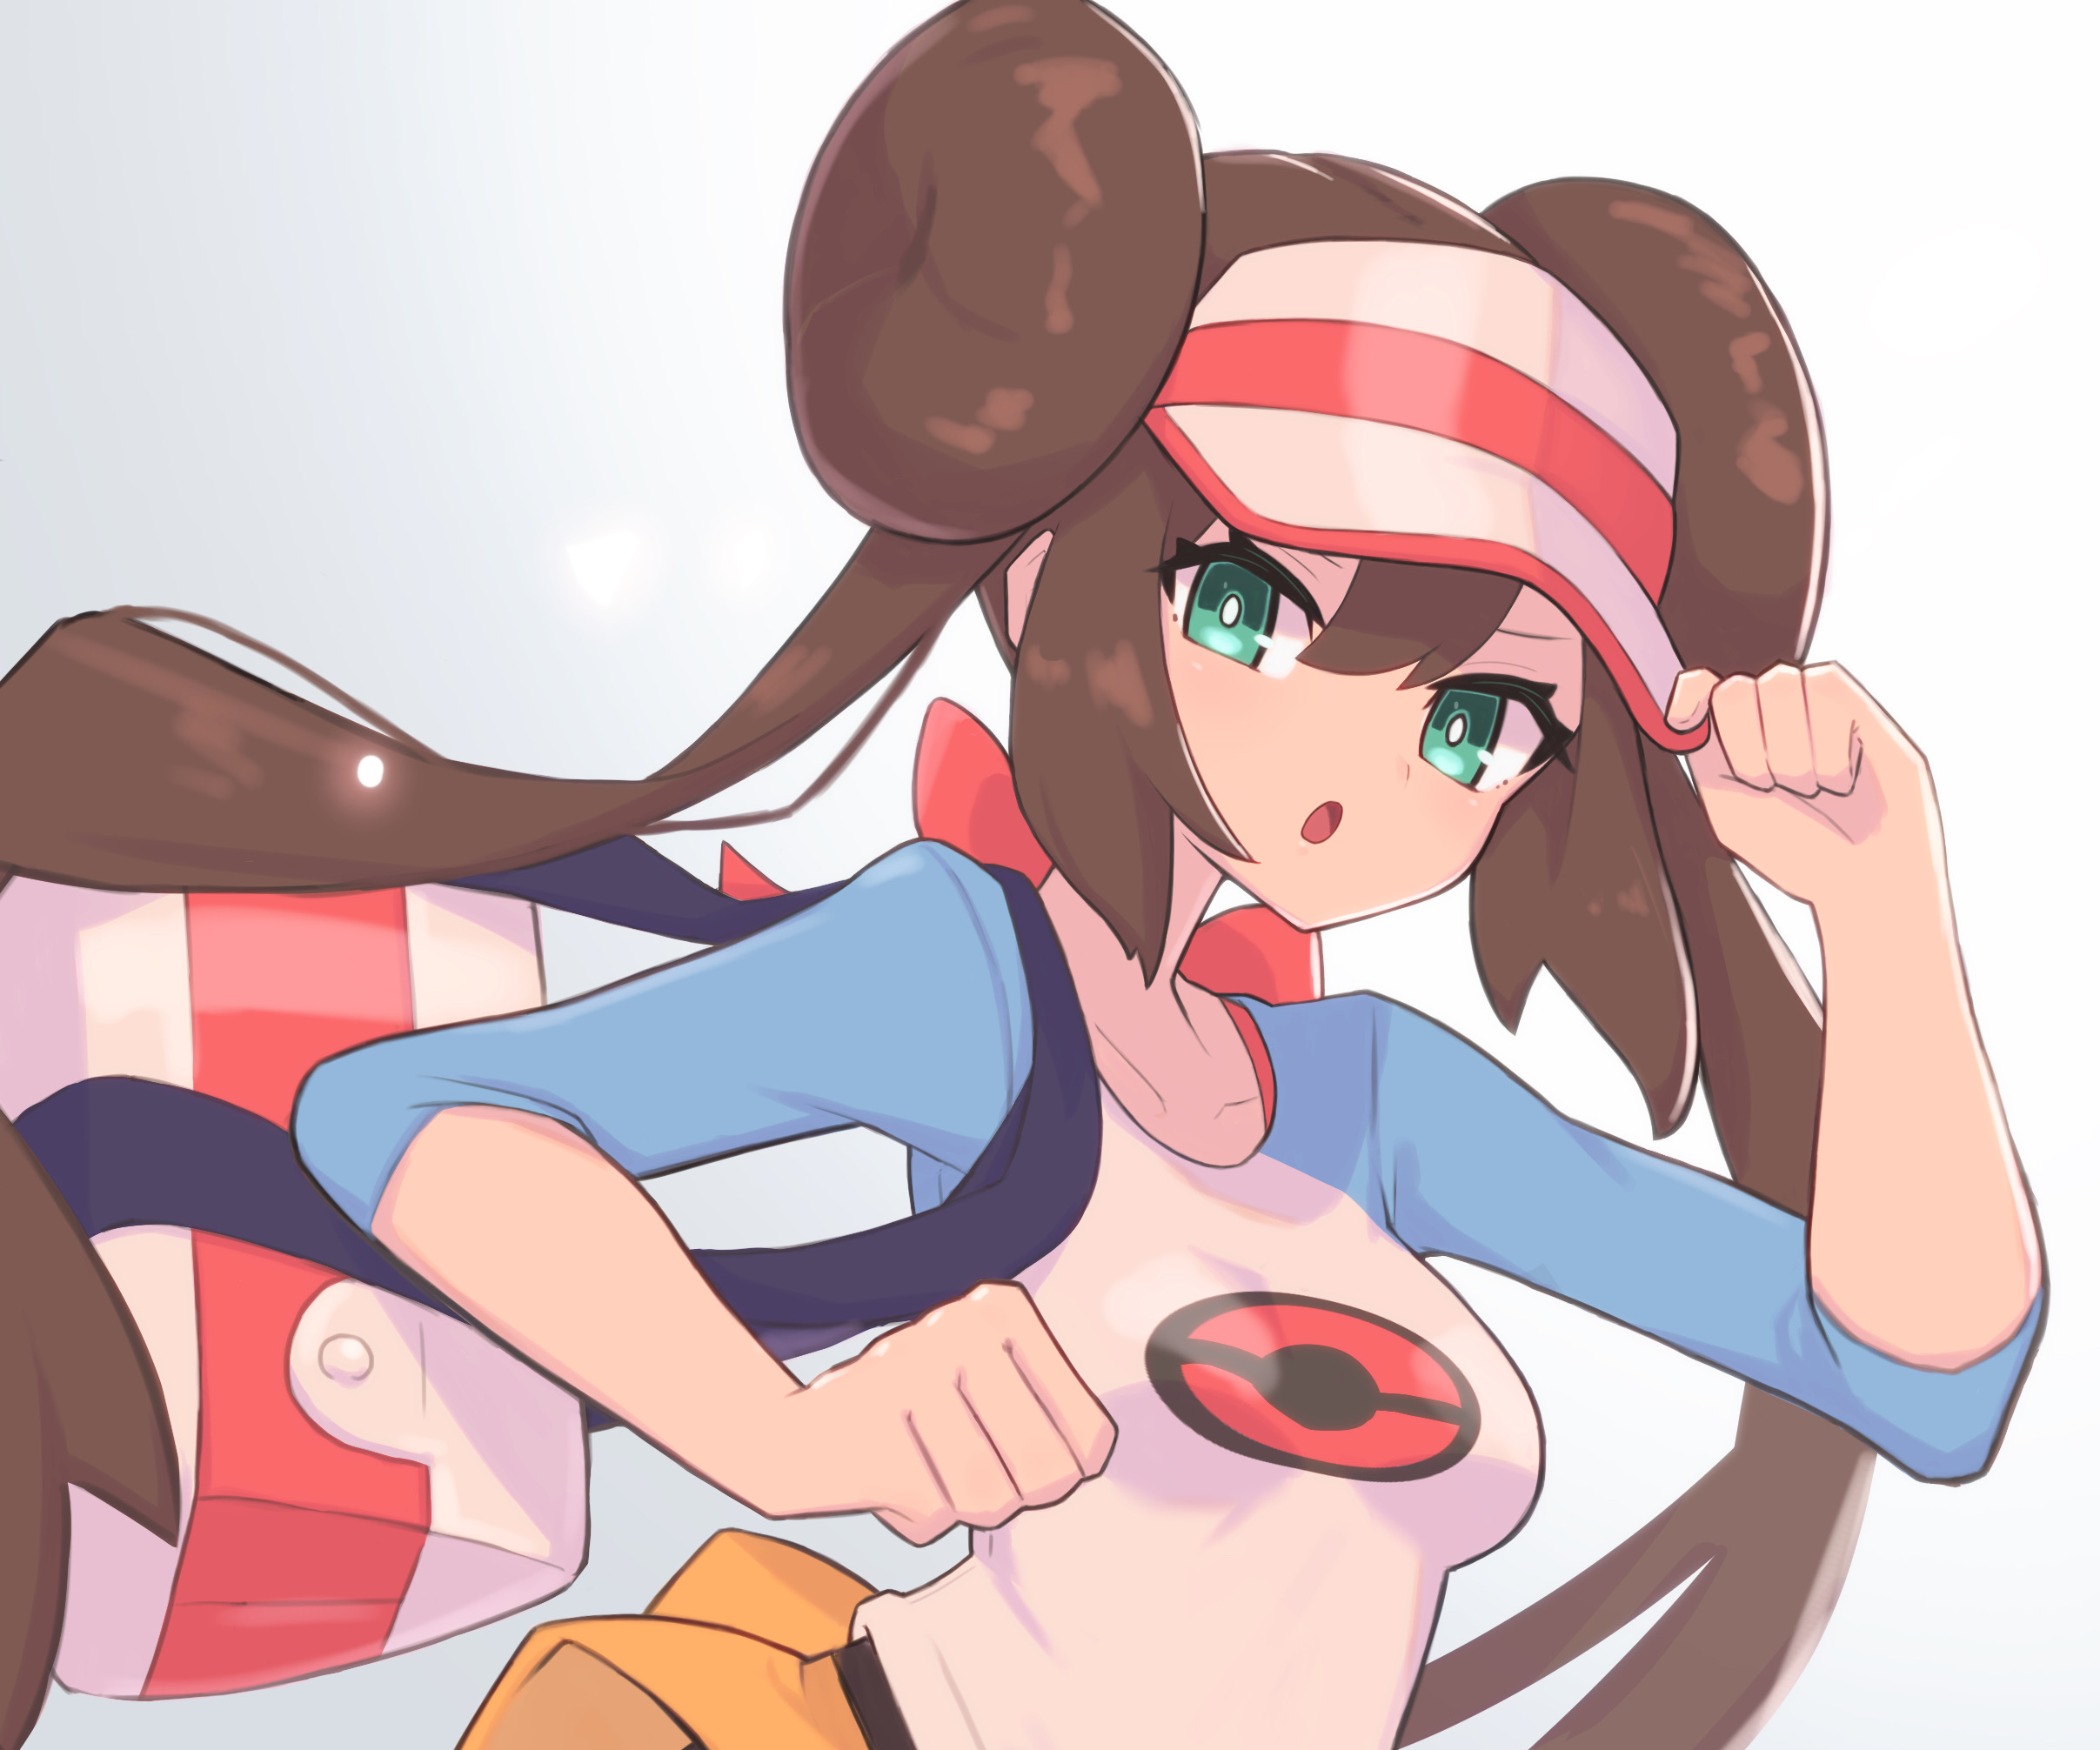 Popular Mei (Pokémon) Image for Phone